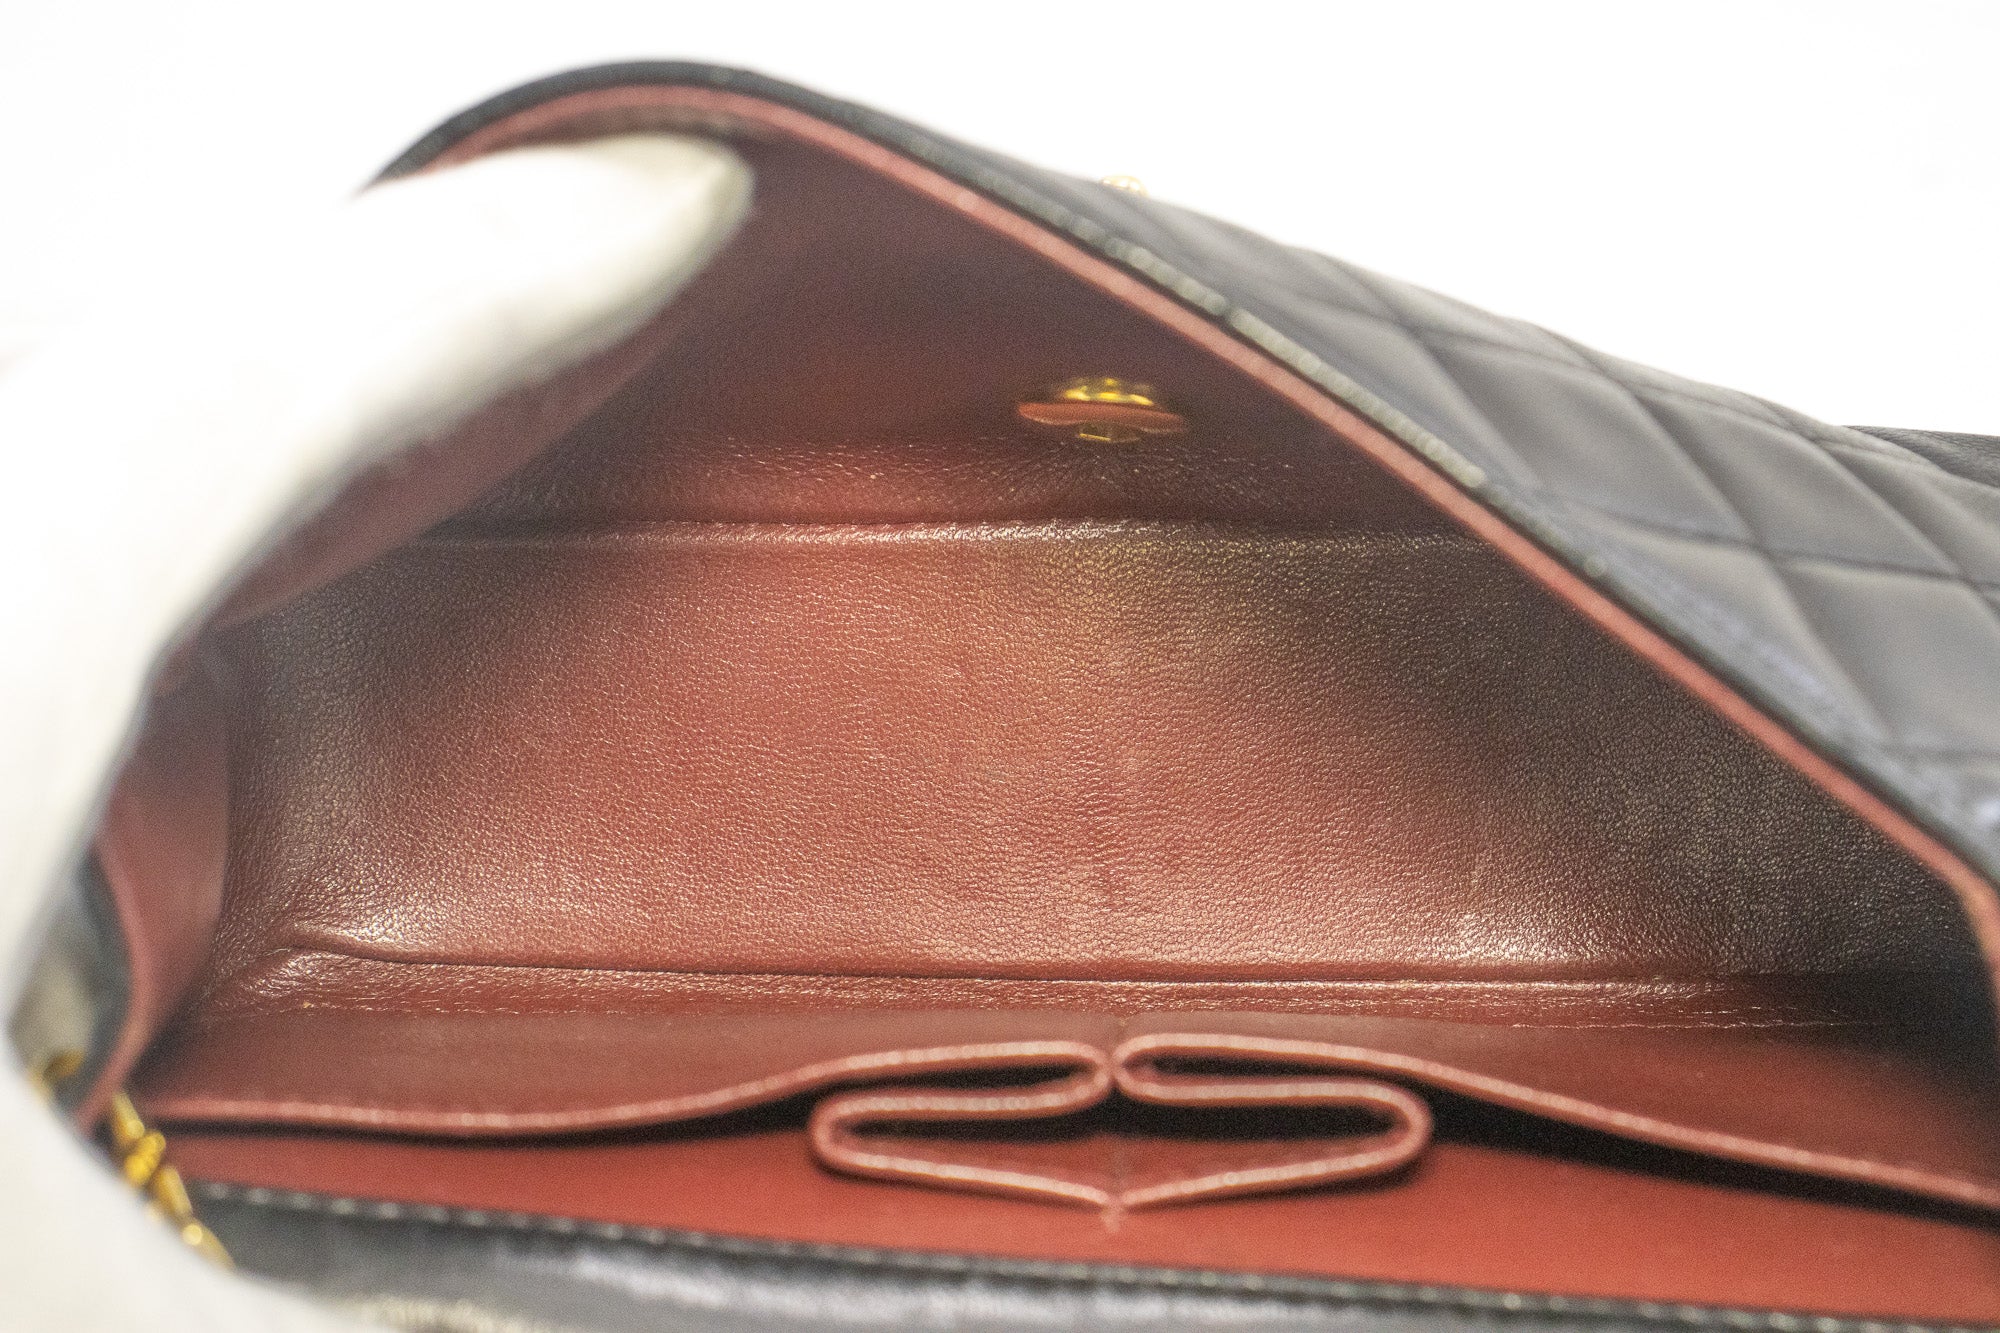 CHANEL Small Chain Shoulder Bag Clutch Black Quilted Flap Lambskin j85 –  hannari-shop